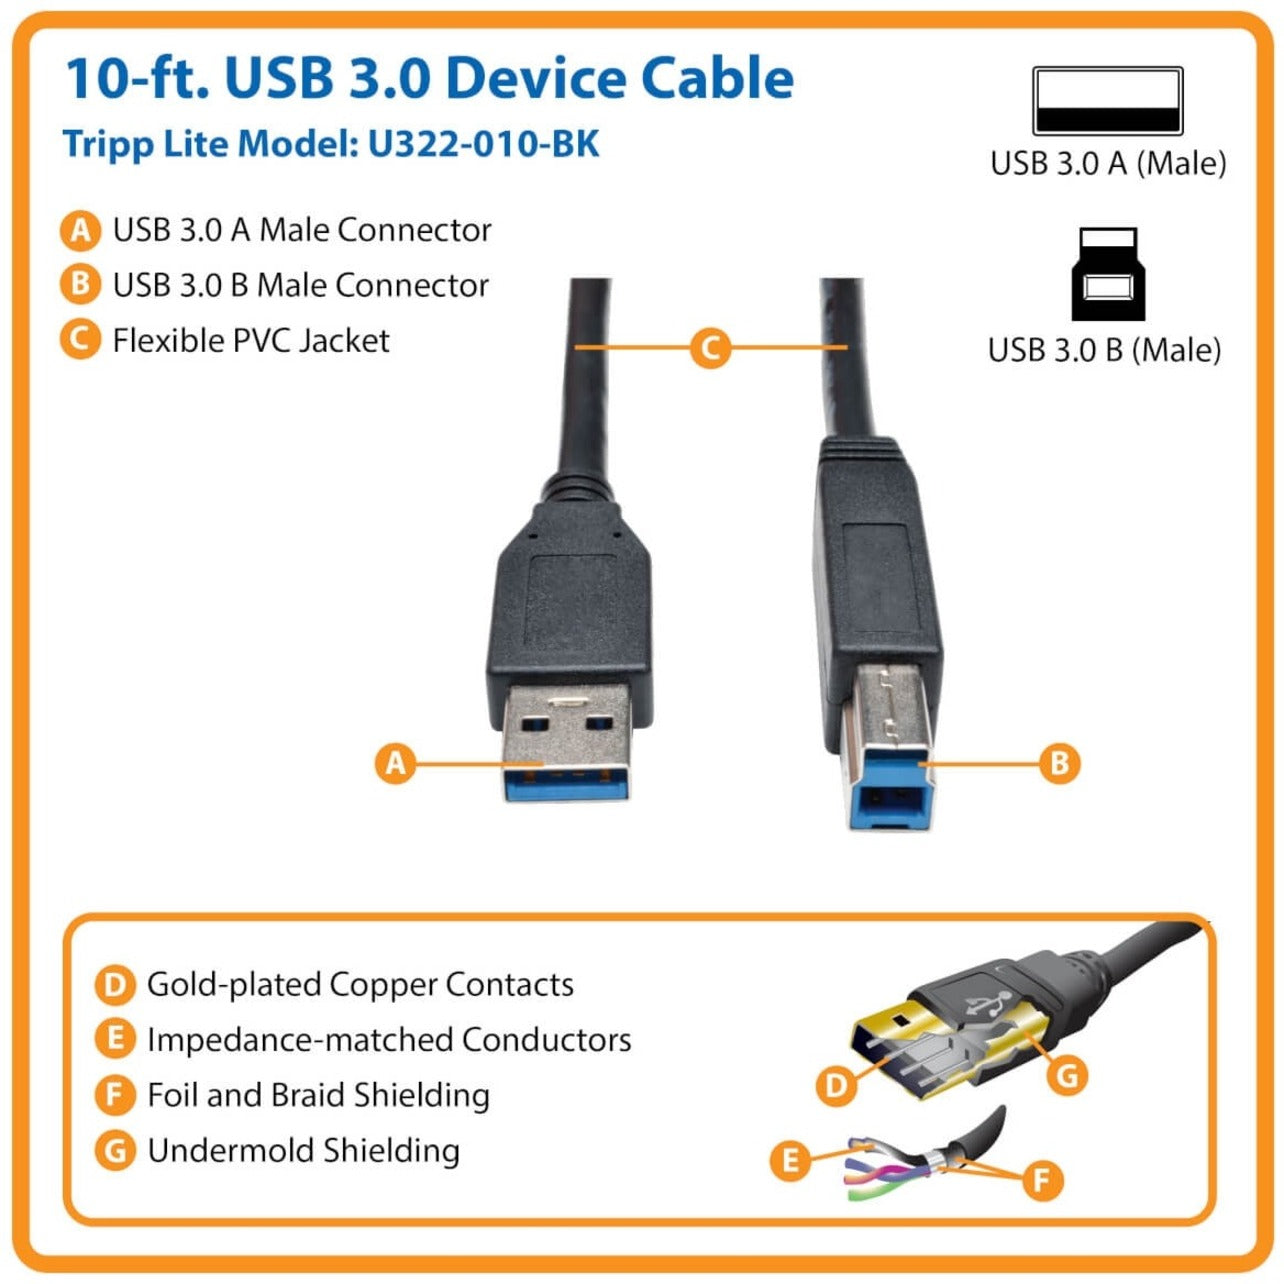 Tripp Lite U322-010-BK USB 3.0 SuperSpeed Device Cable (AB M/M), 10-ft, Black